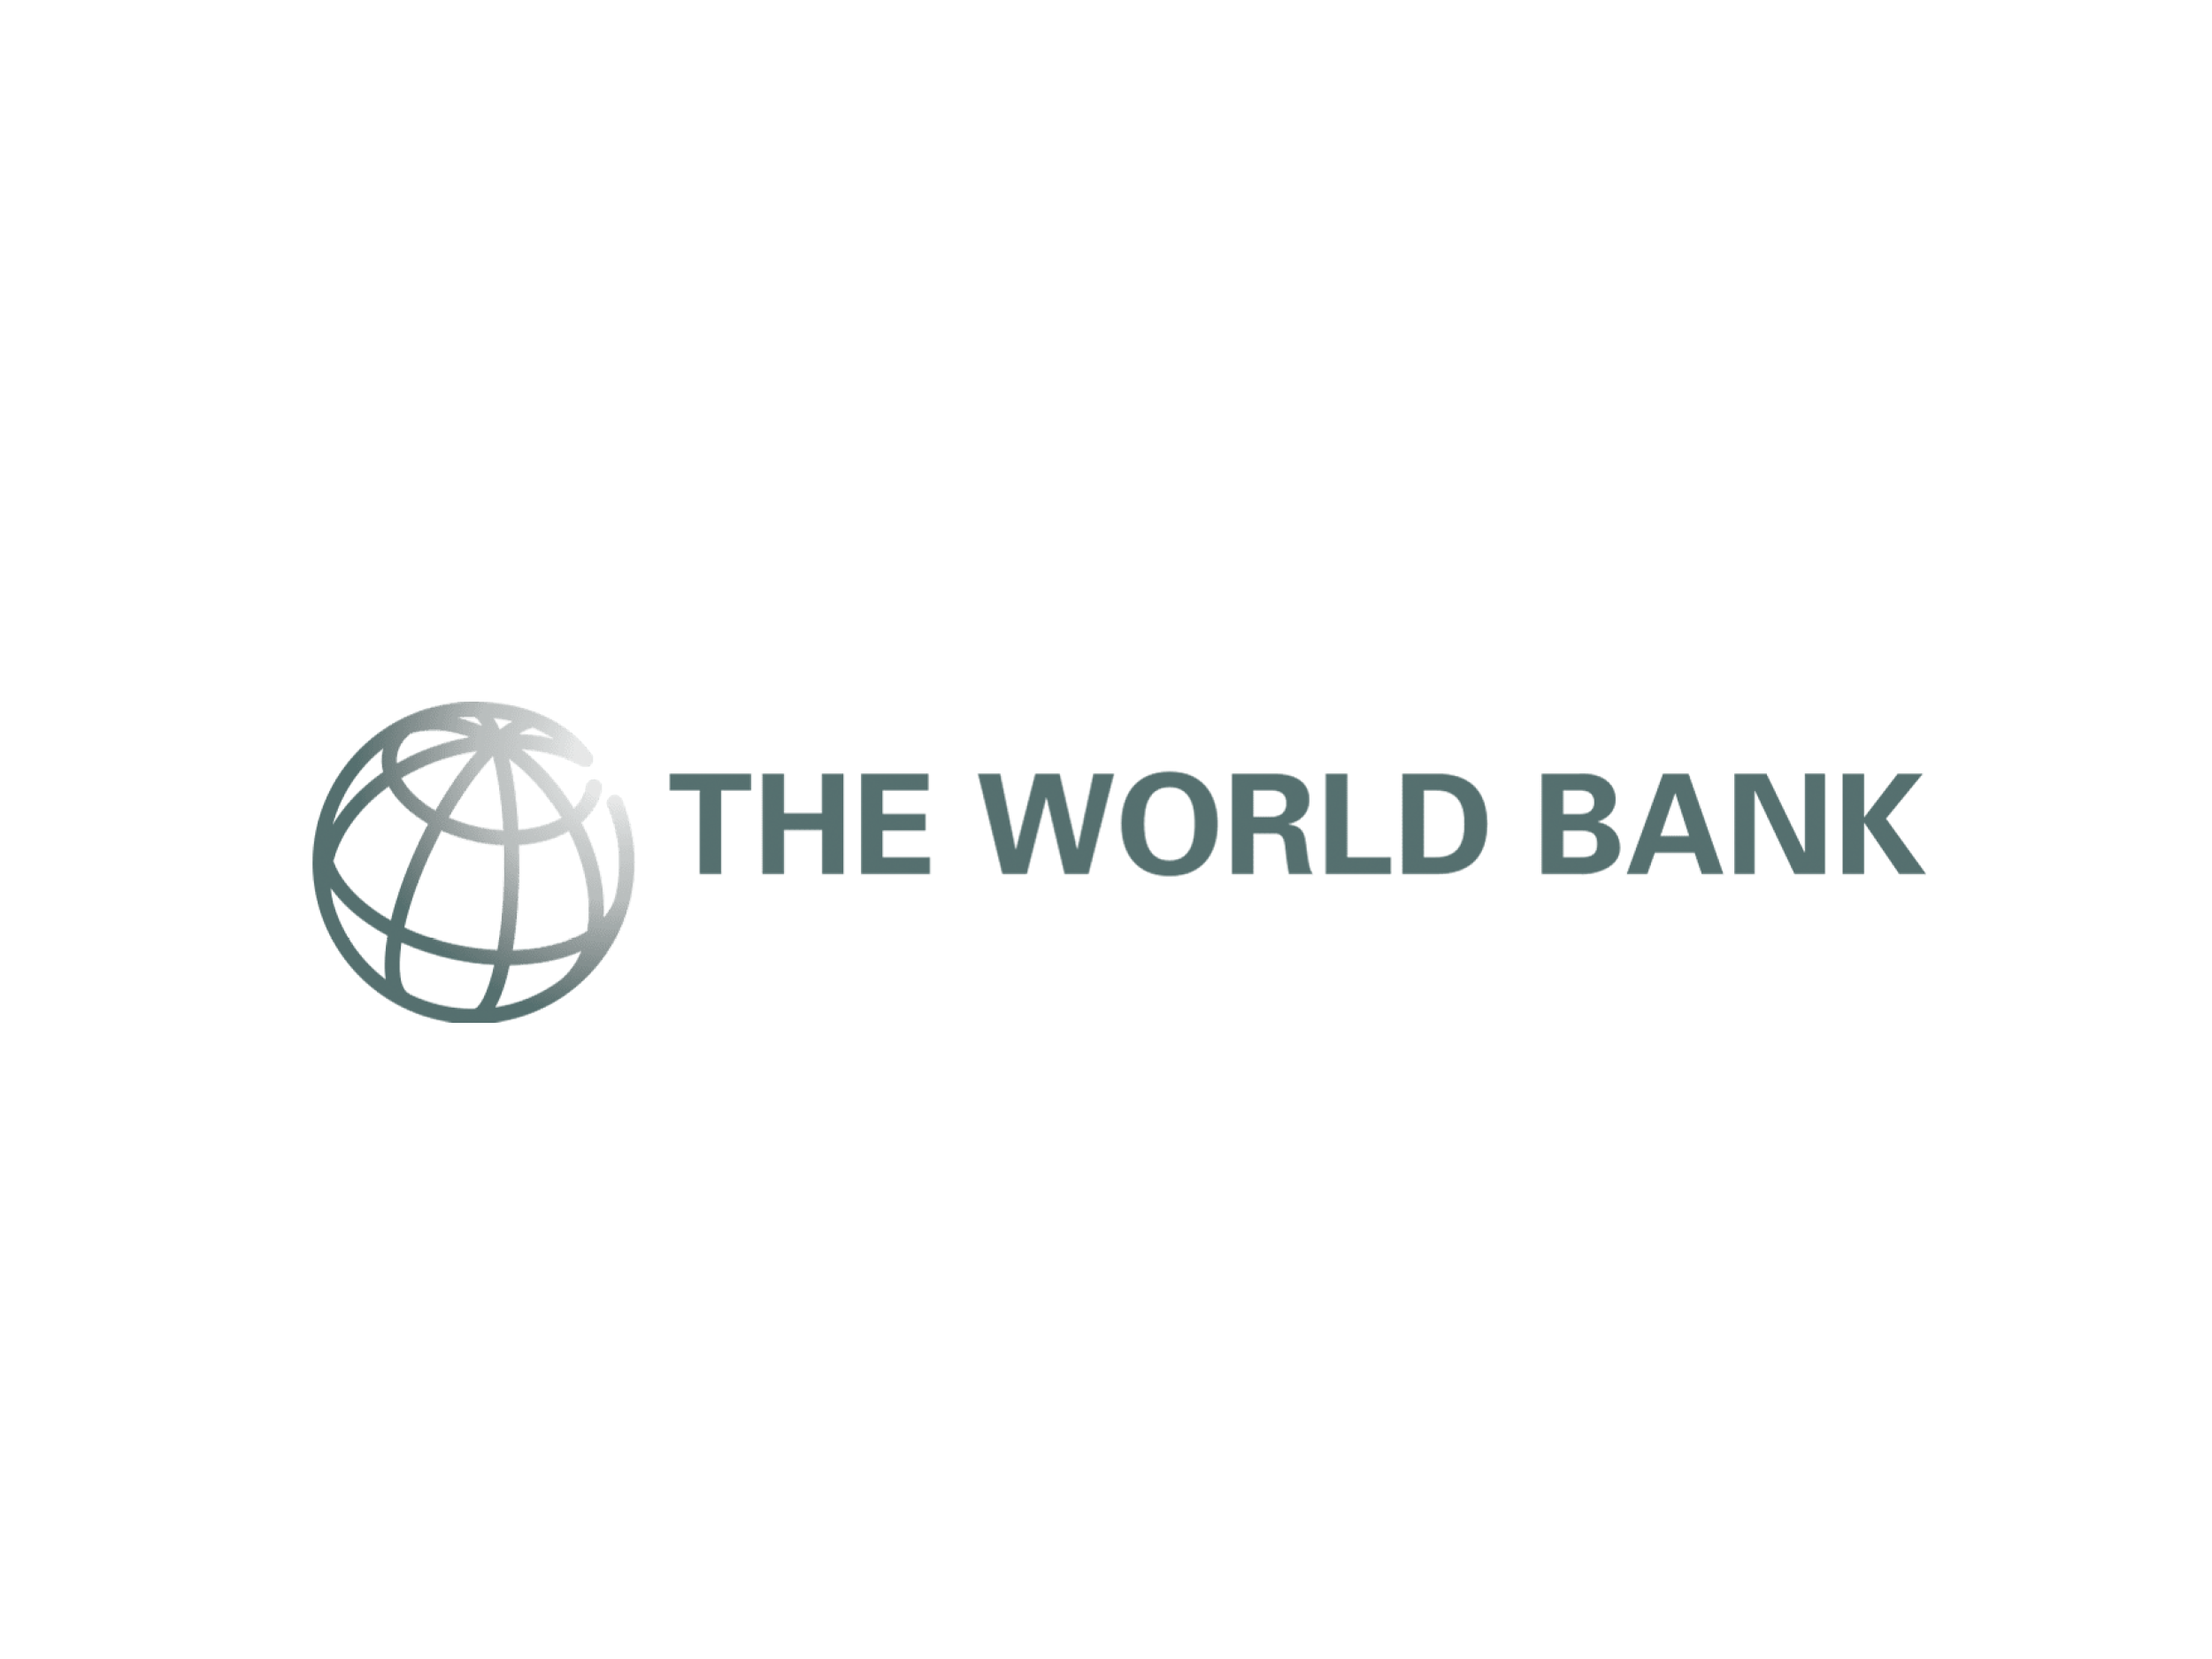 Какой всемирный банк. Всемирный банк. Лого Всемирного банка. World Bank логотип. Всемирный банк (мировой банк).